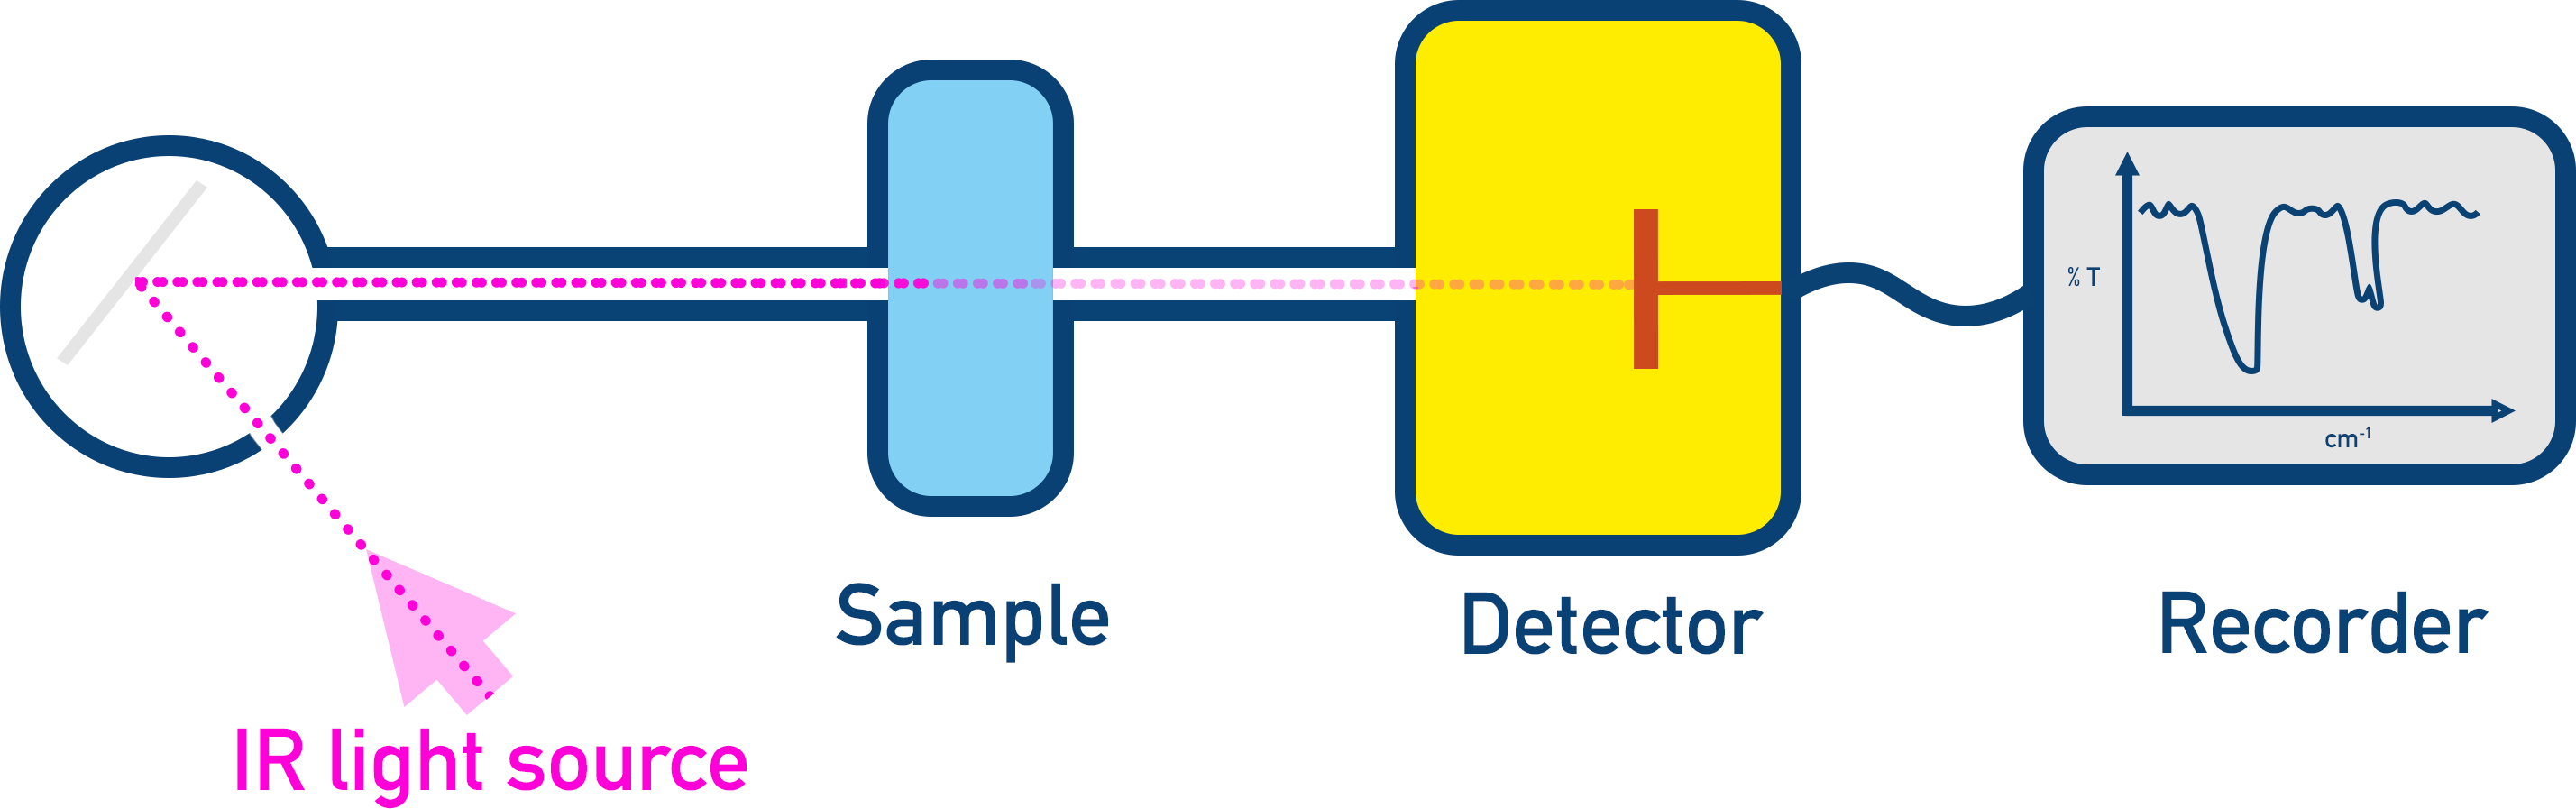 IR spectrometer, Sample, Detector and Recorder